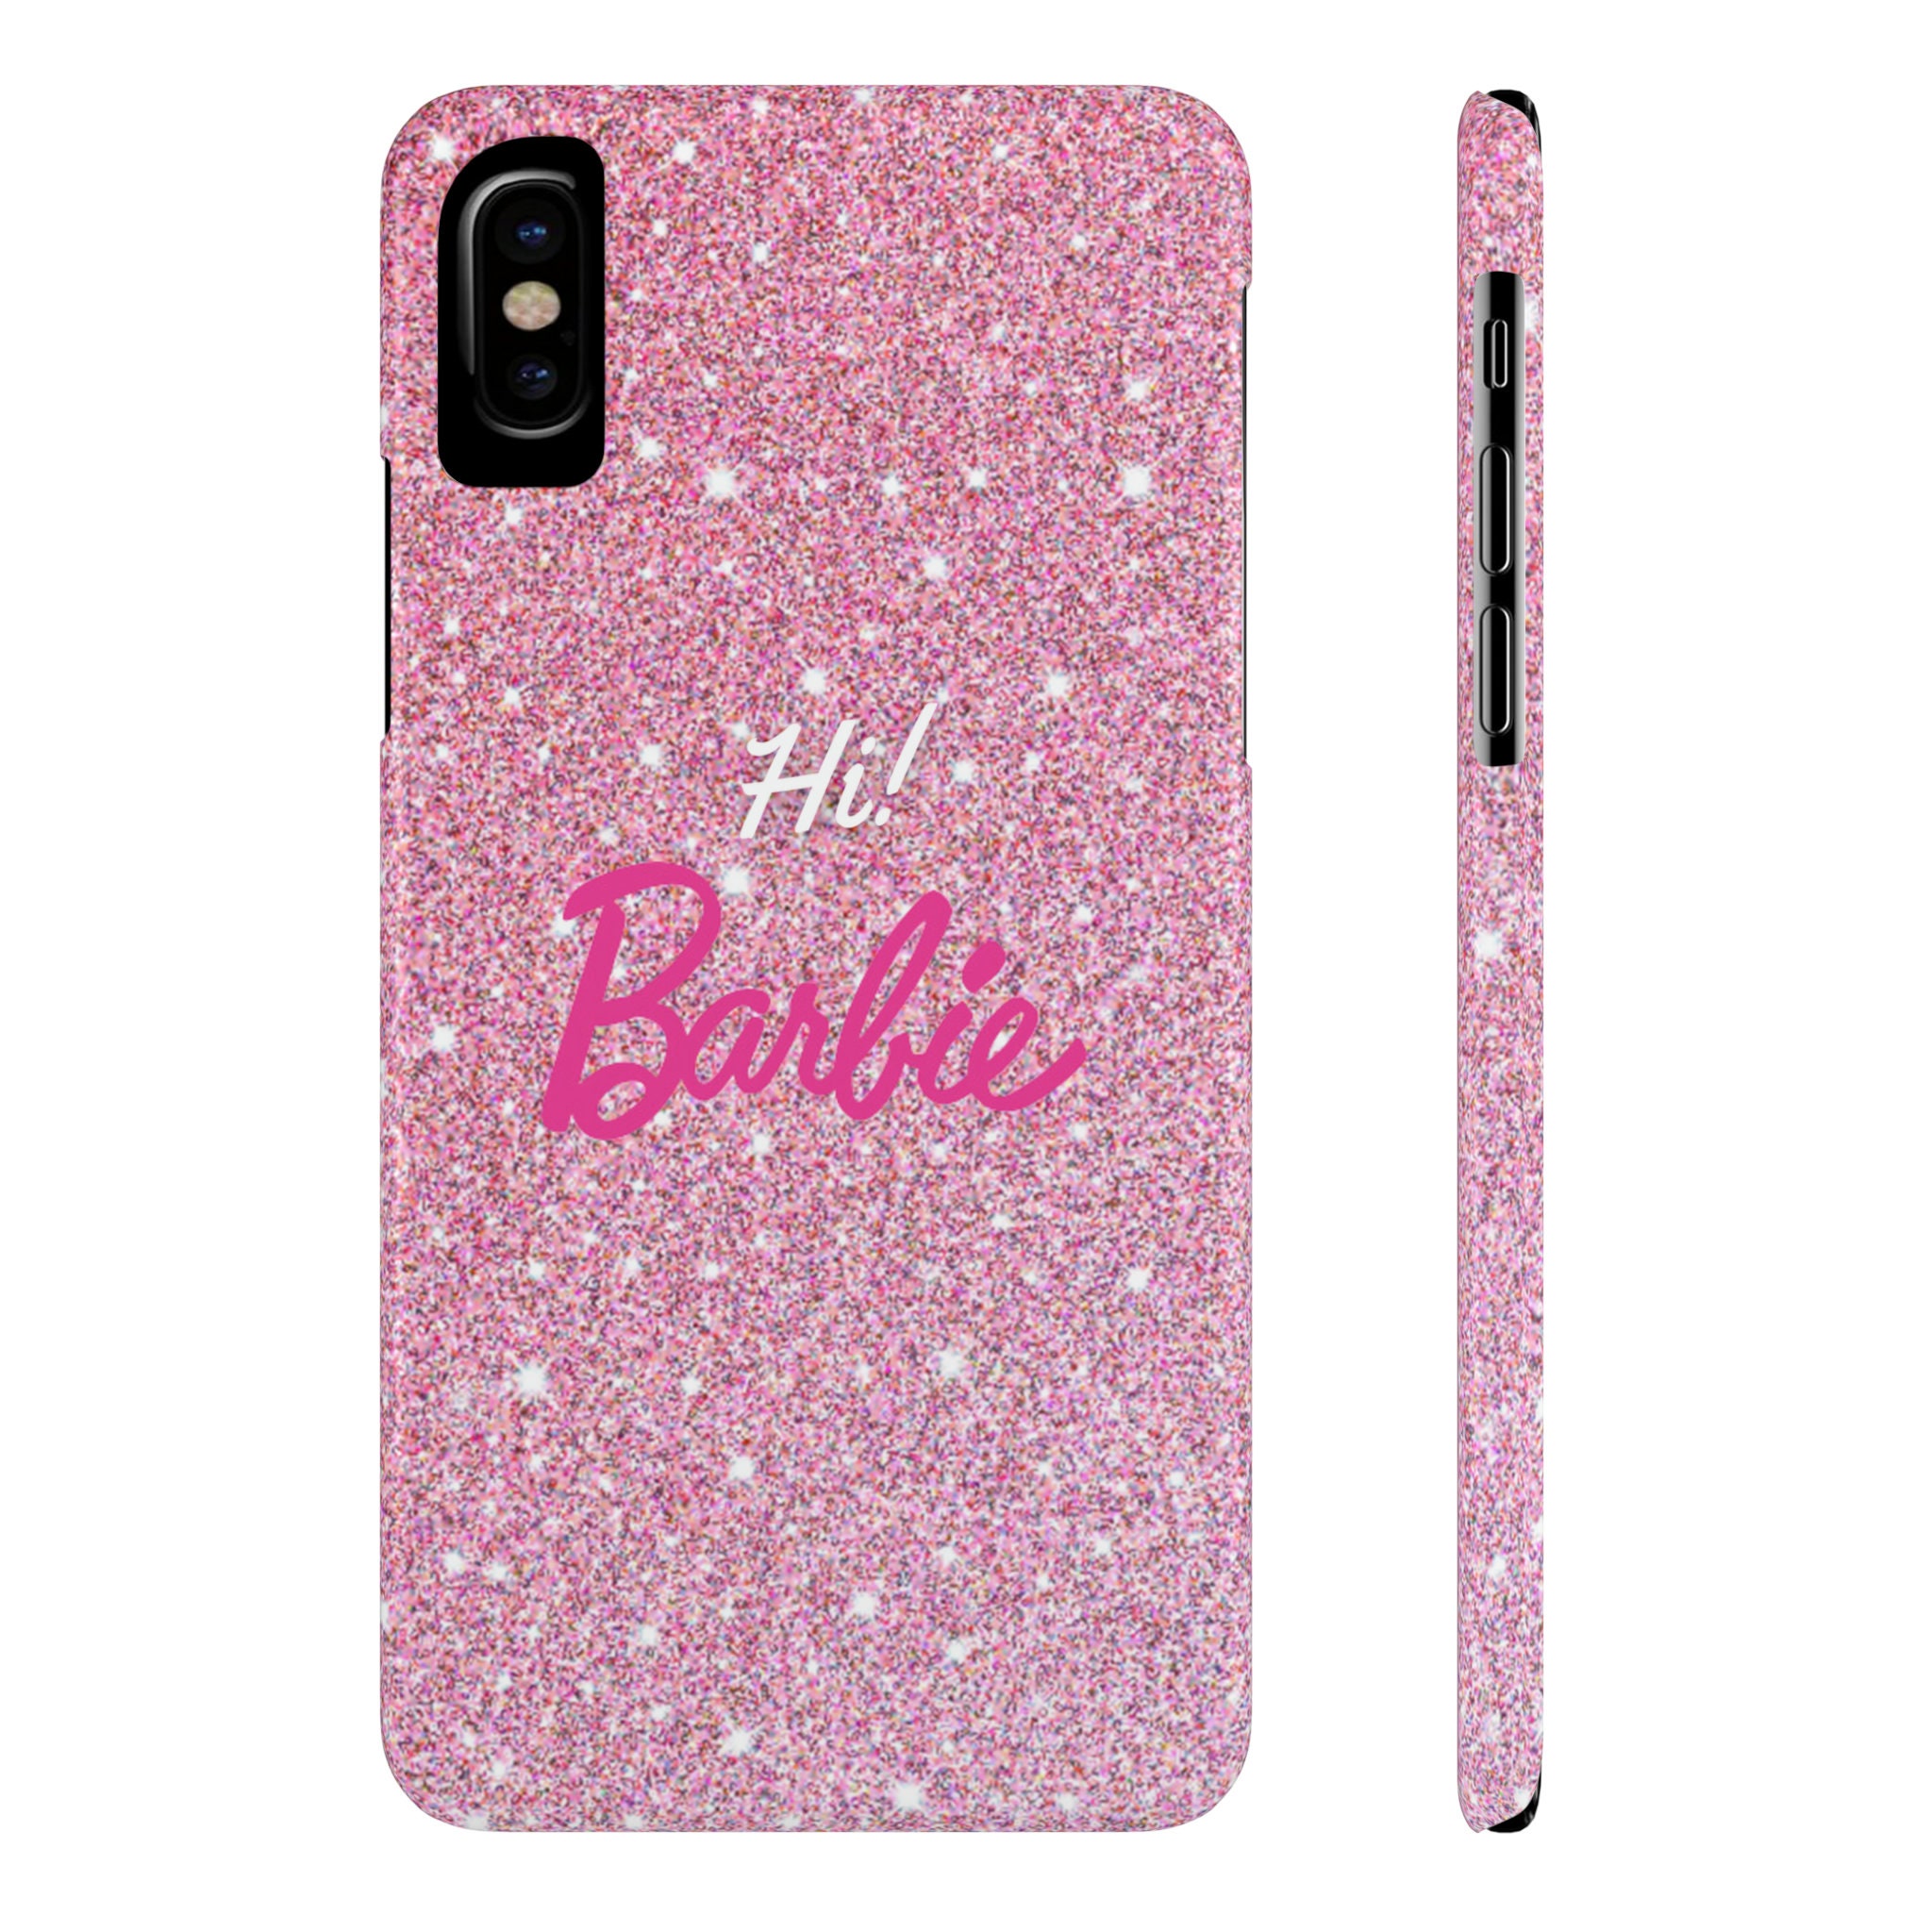 Hi Barbie Phone Case Cute & Stylish Iconic Phrase Barbie Movie Perfect ...